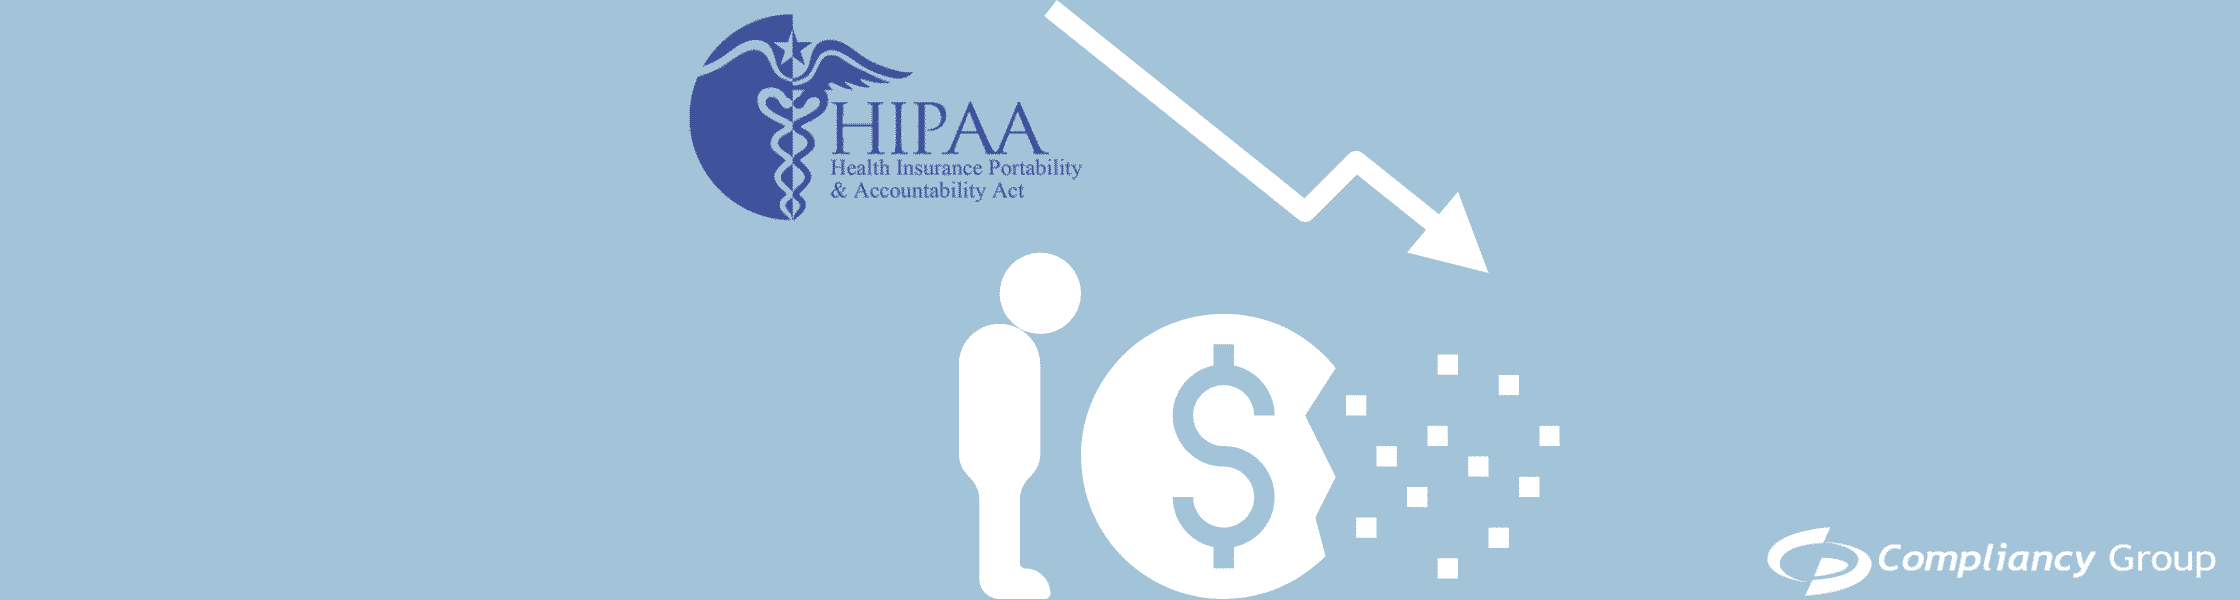 bankruptcy HIPAA fine